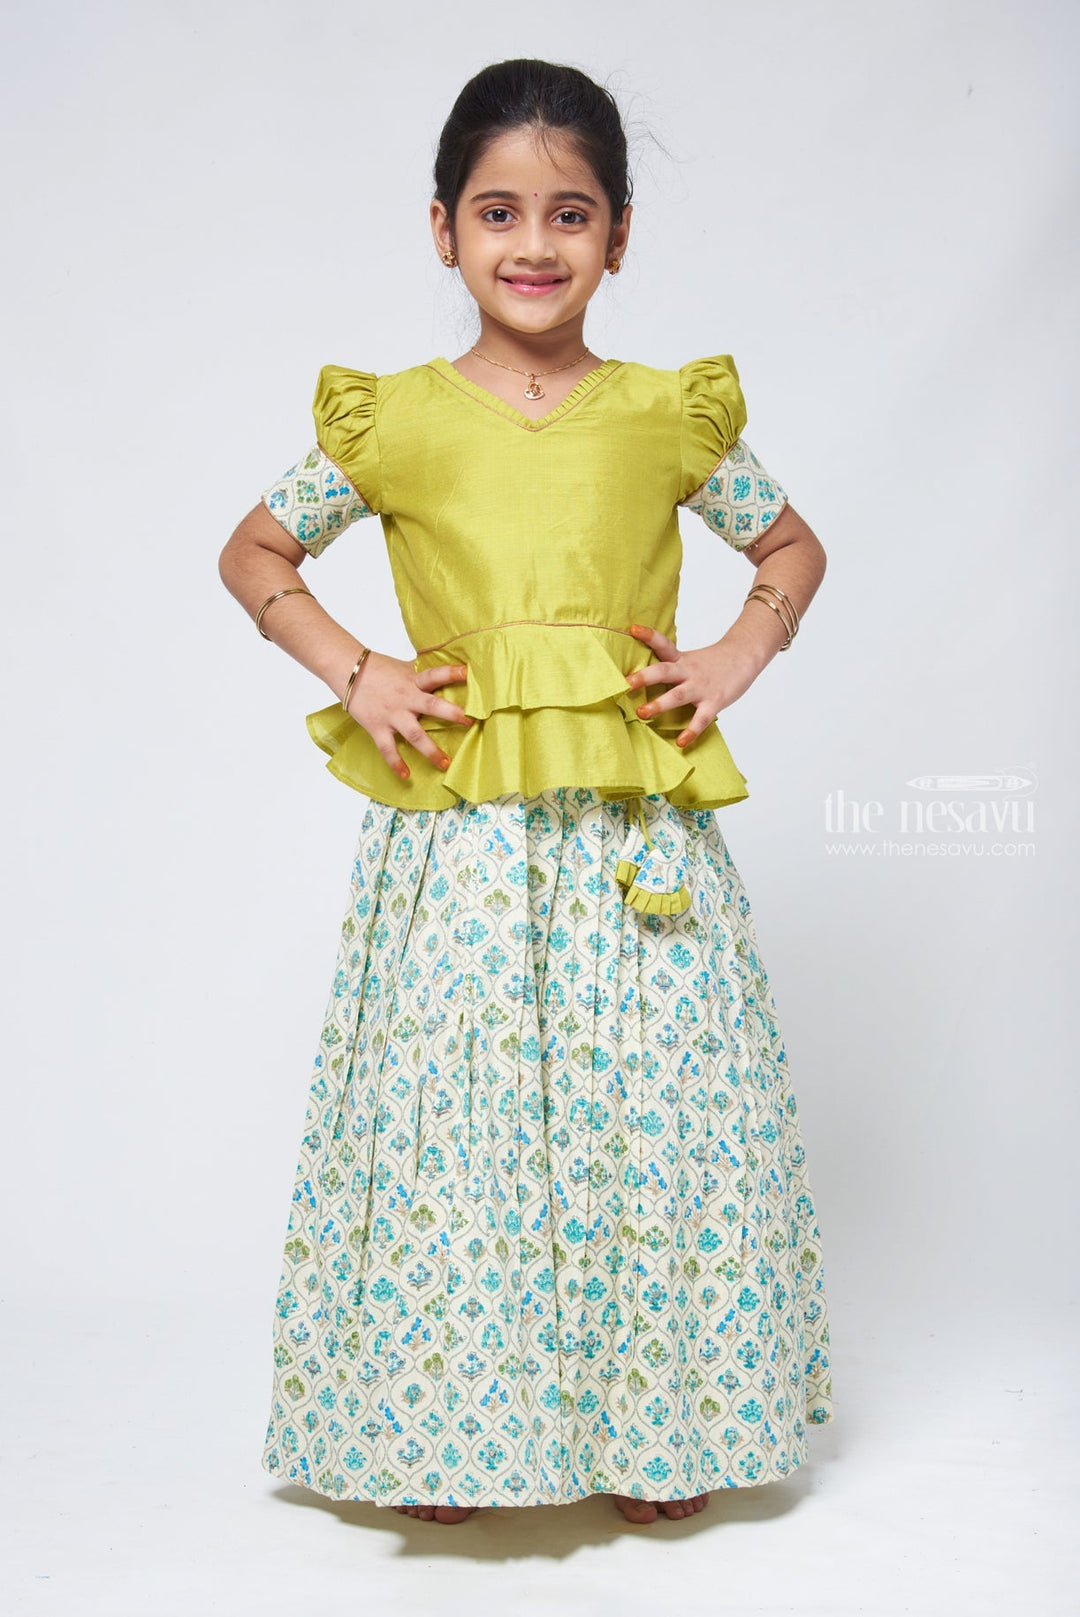 The Nesavu Pattu Pavadai Floral Printed Beige Skirt with Green Jacquard Peplum Blouse Nesavu 16 (1Y) / Green GPP290B-16 New Kanchipuram Pattu Pavadai | Silk Dress for Girls | The Nesavu